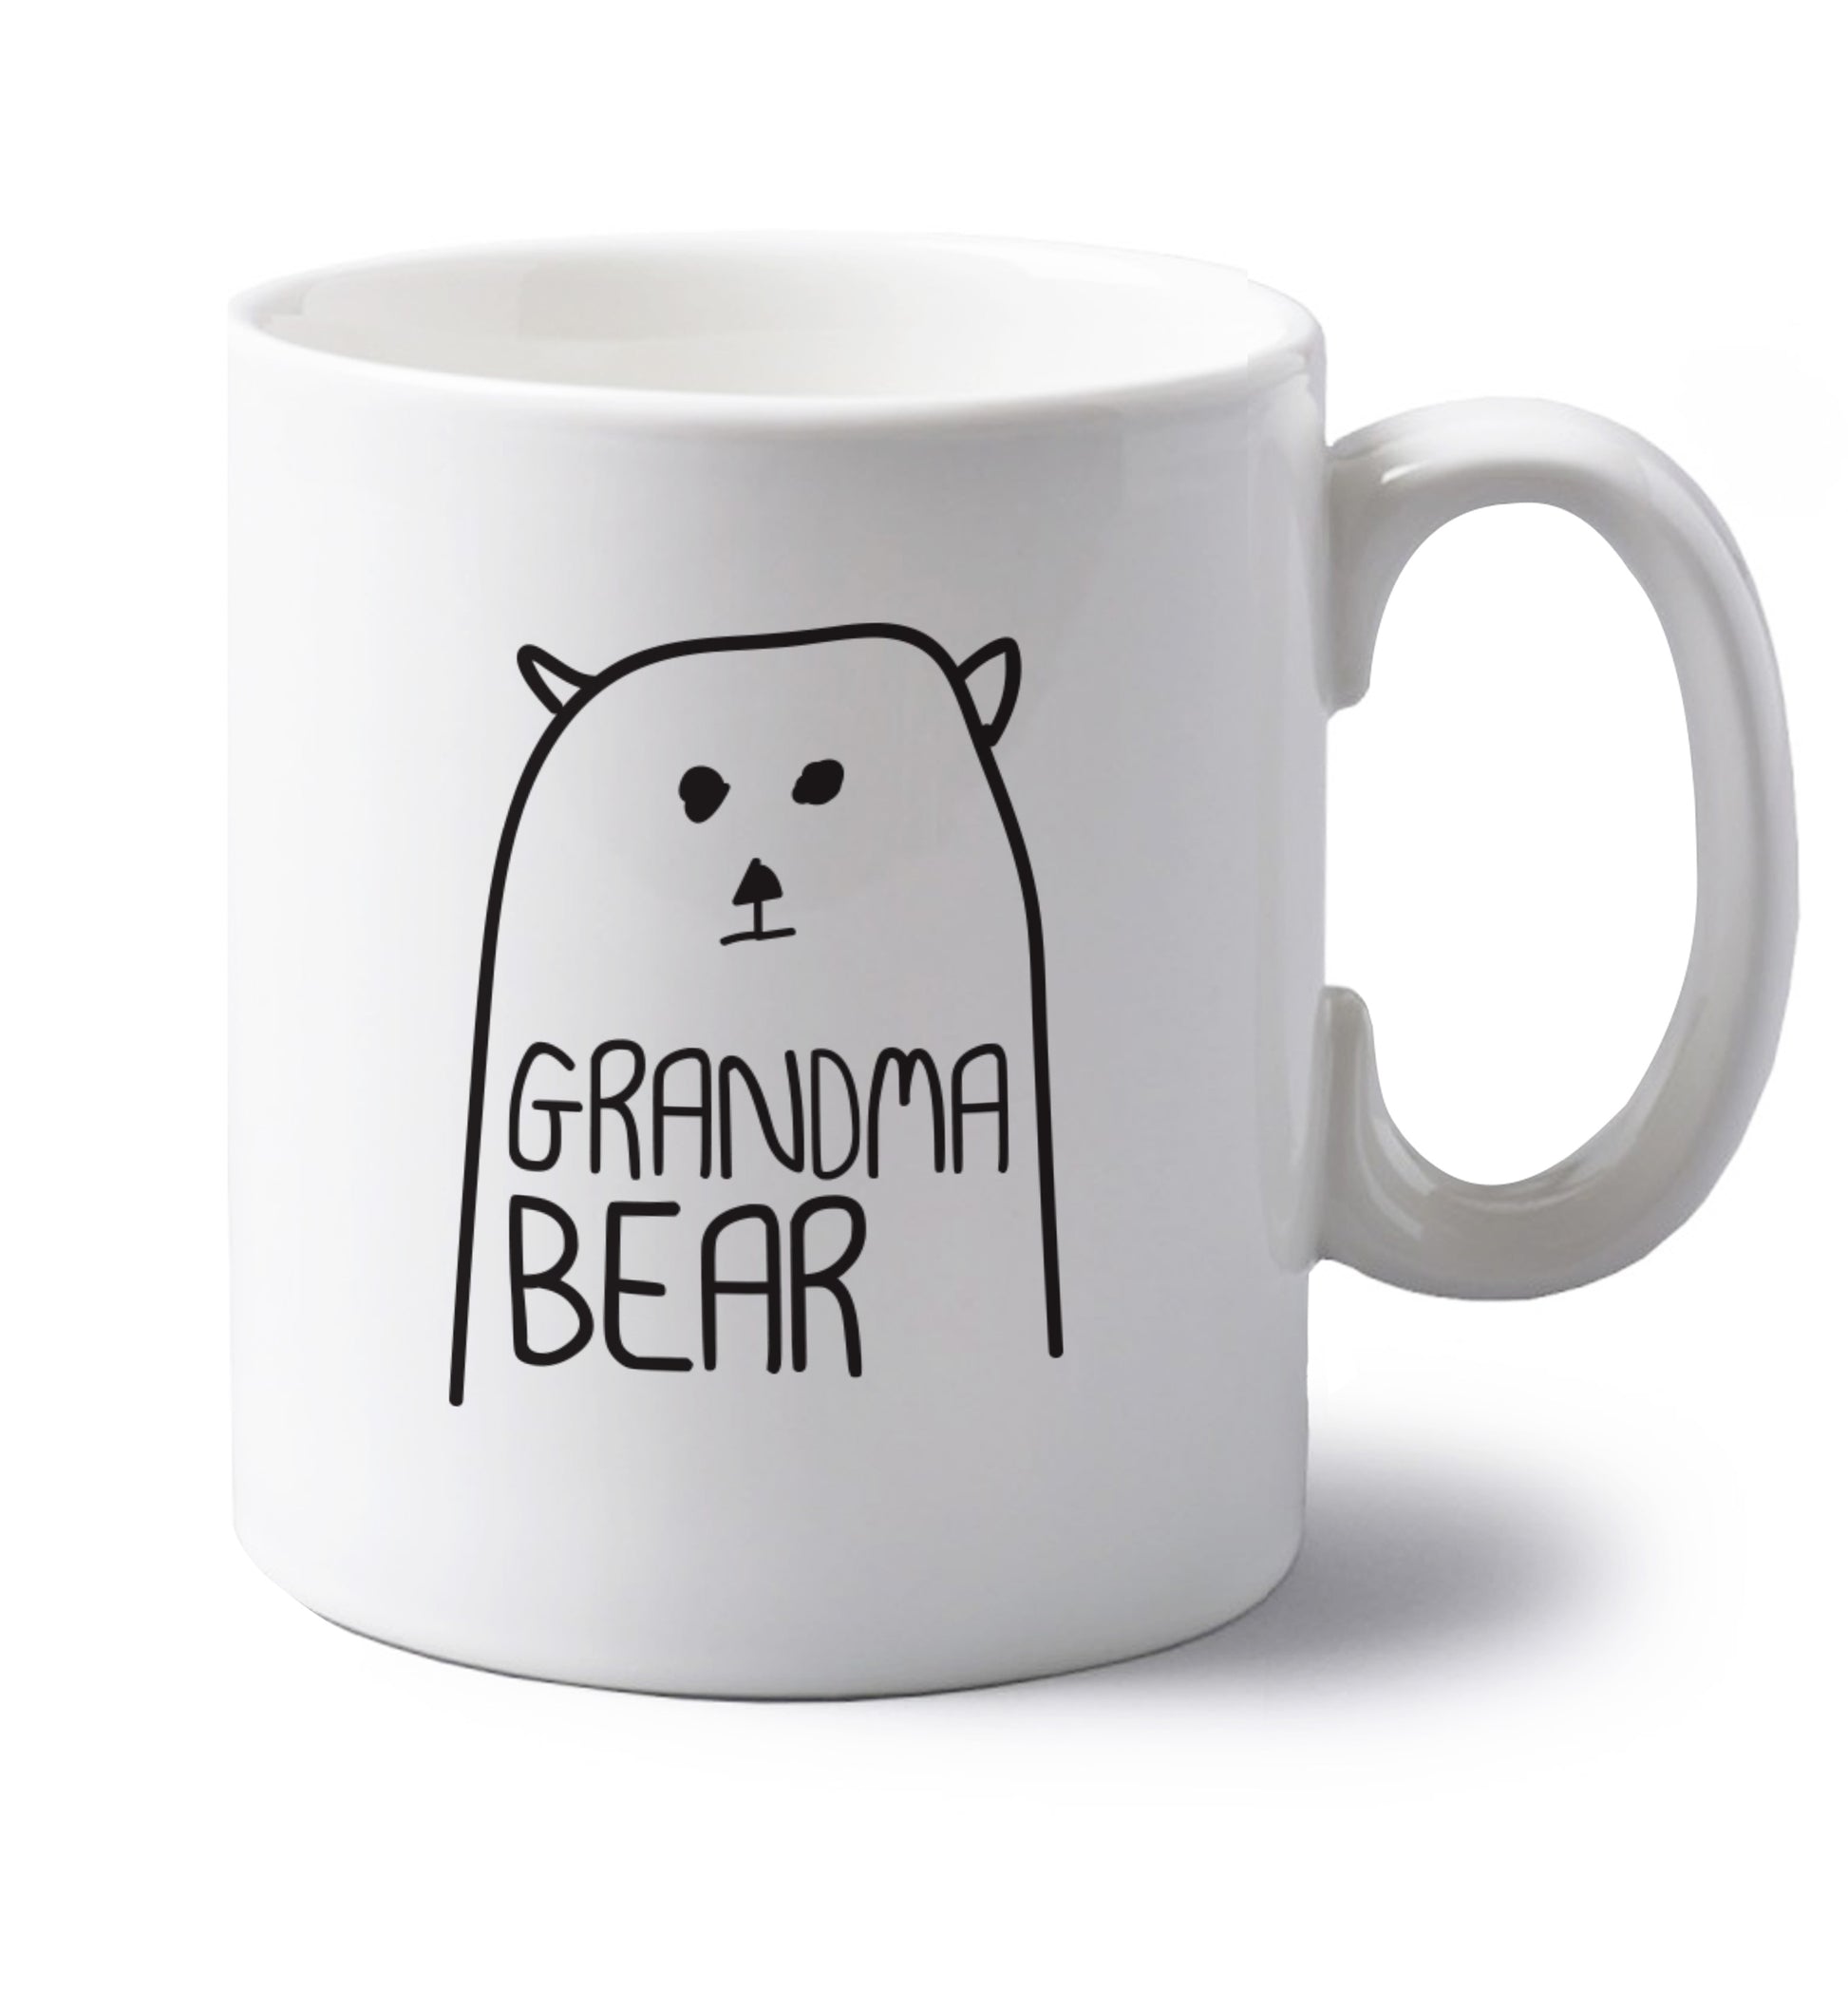 Grandma bear left handed white ceramic mug 